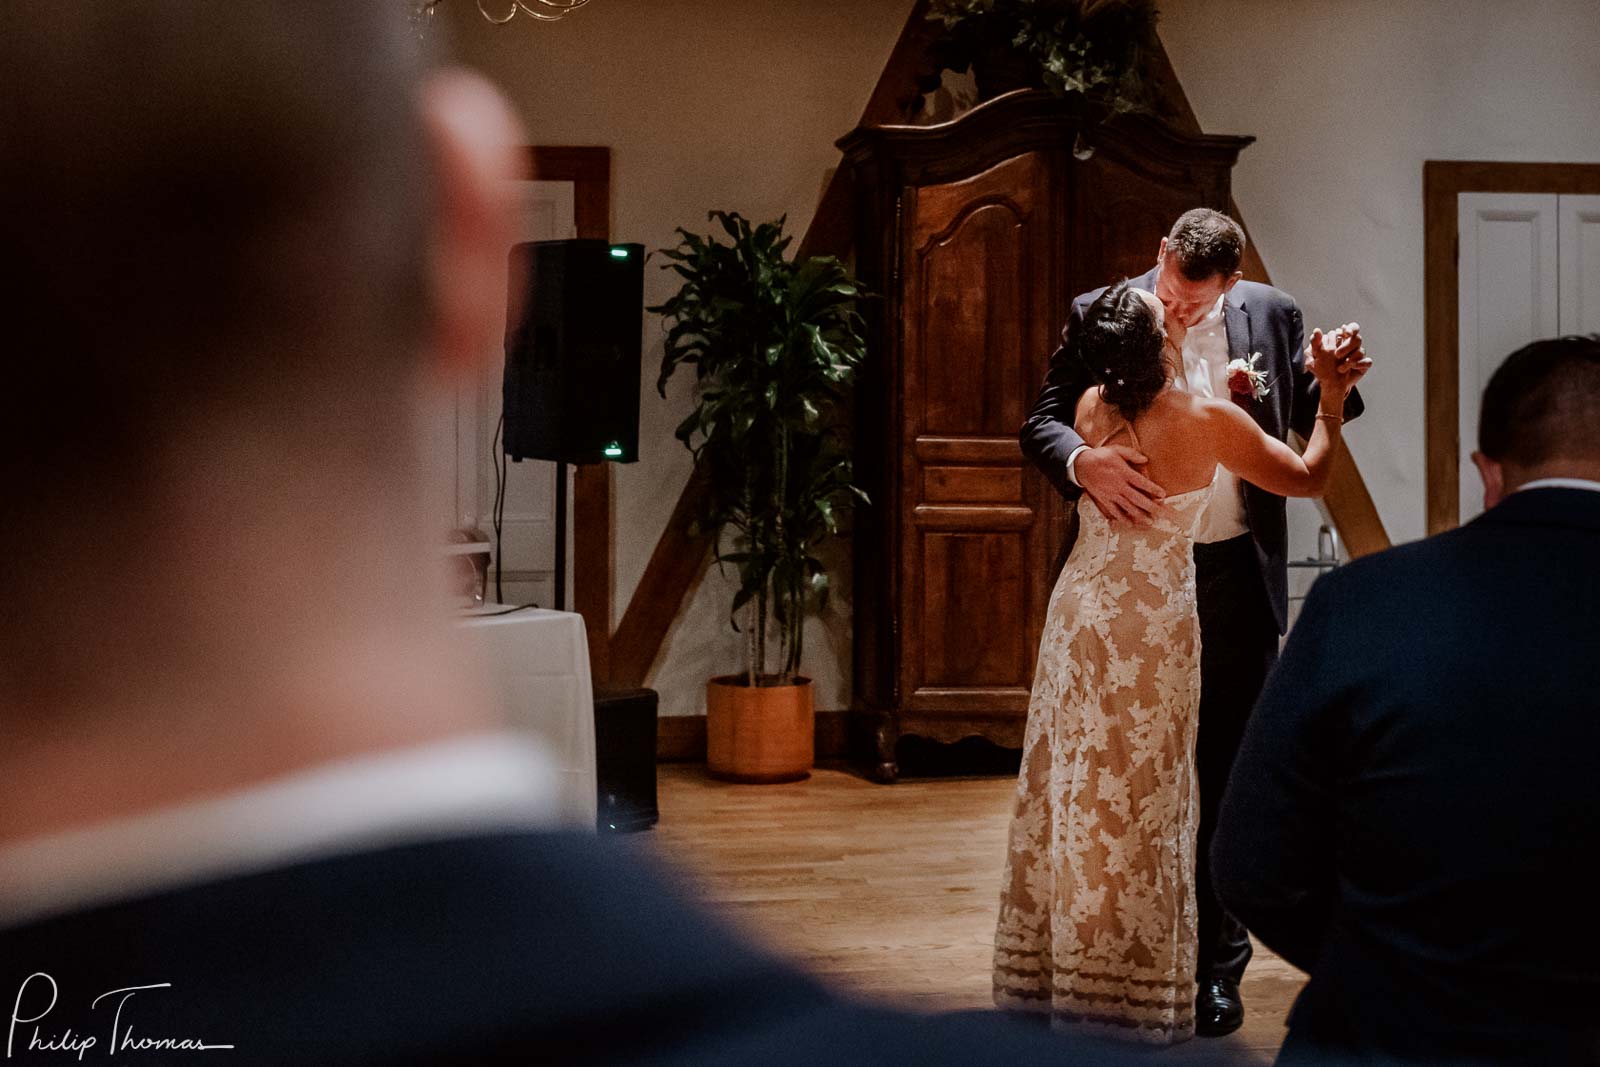 Couple in ,ovely light during first dance Club Giraud Wedding Reception San Antonio weddings Philip Thomas Photography